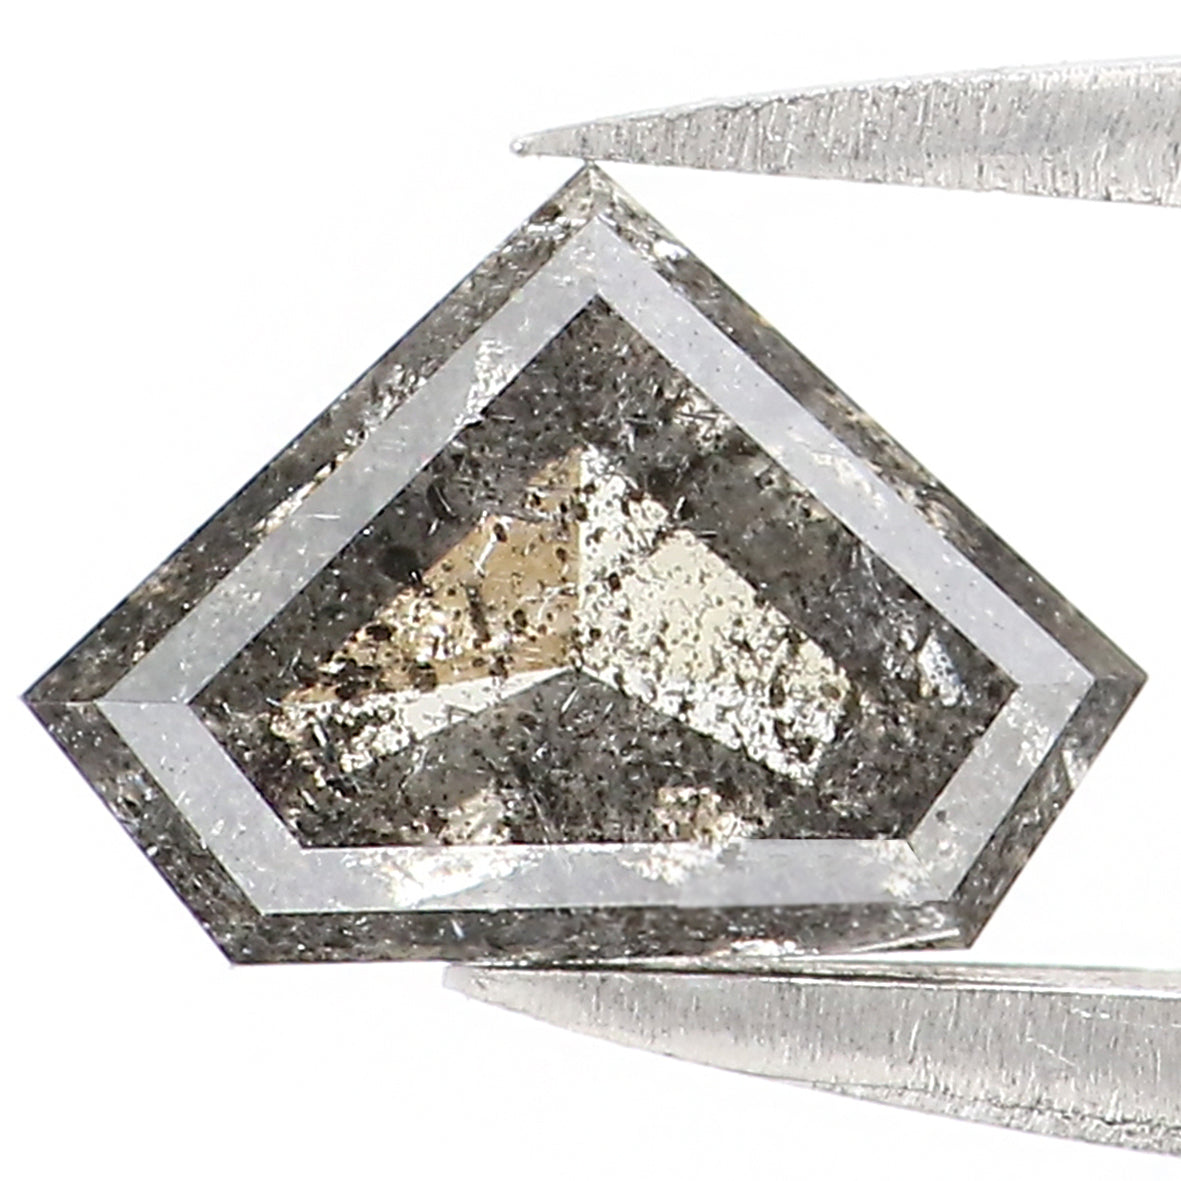 1.13 Ct Natural Loose Shield Shape Diamond Salt And Pepper Shield Cut Diamond 5.70 MM Black Gray Color Shield Shape Rose Cut Diamond QL1410